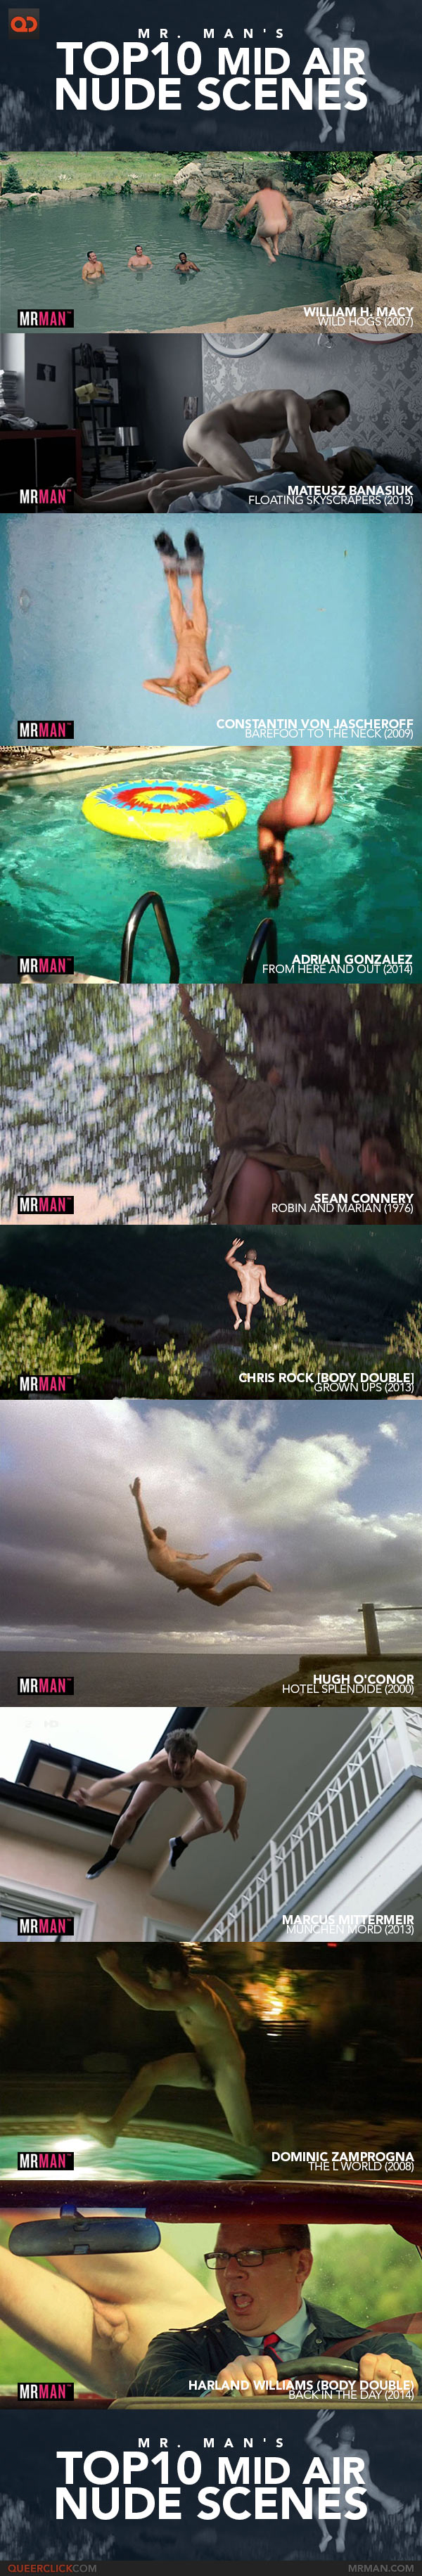 Mr Man's Top 10 Mid Air Nude Scenes